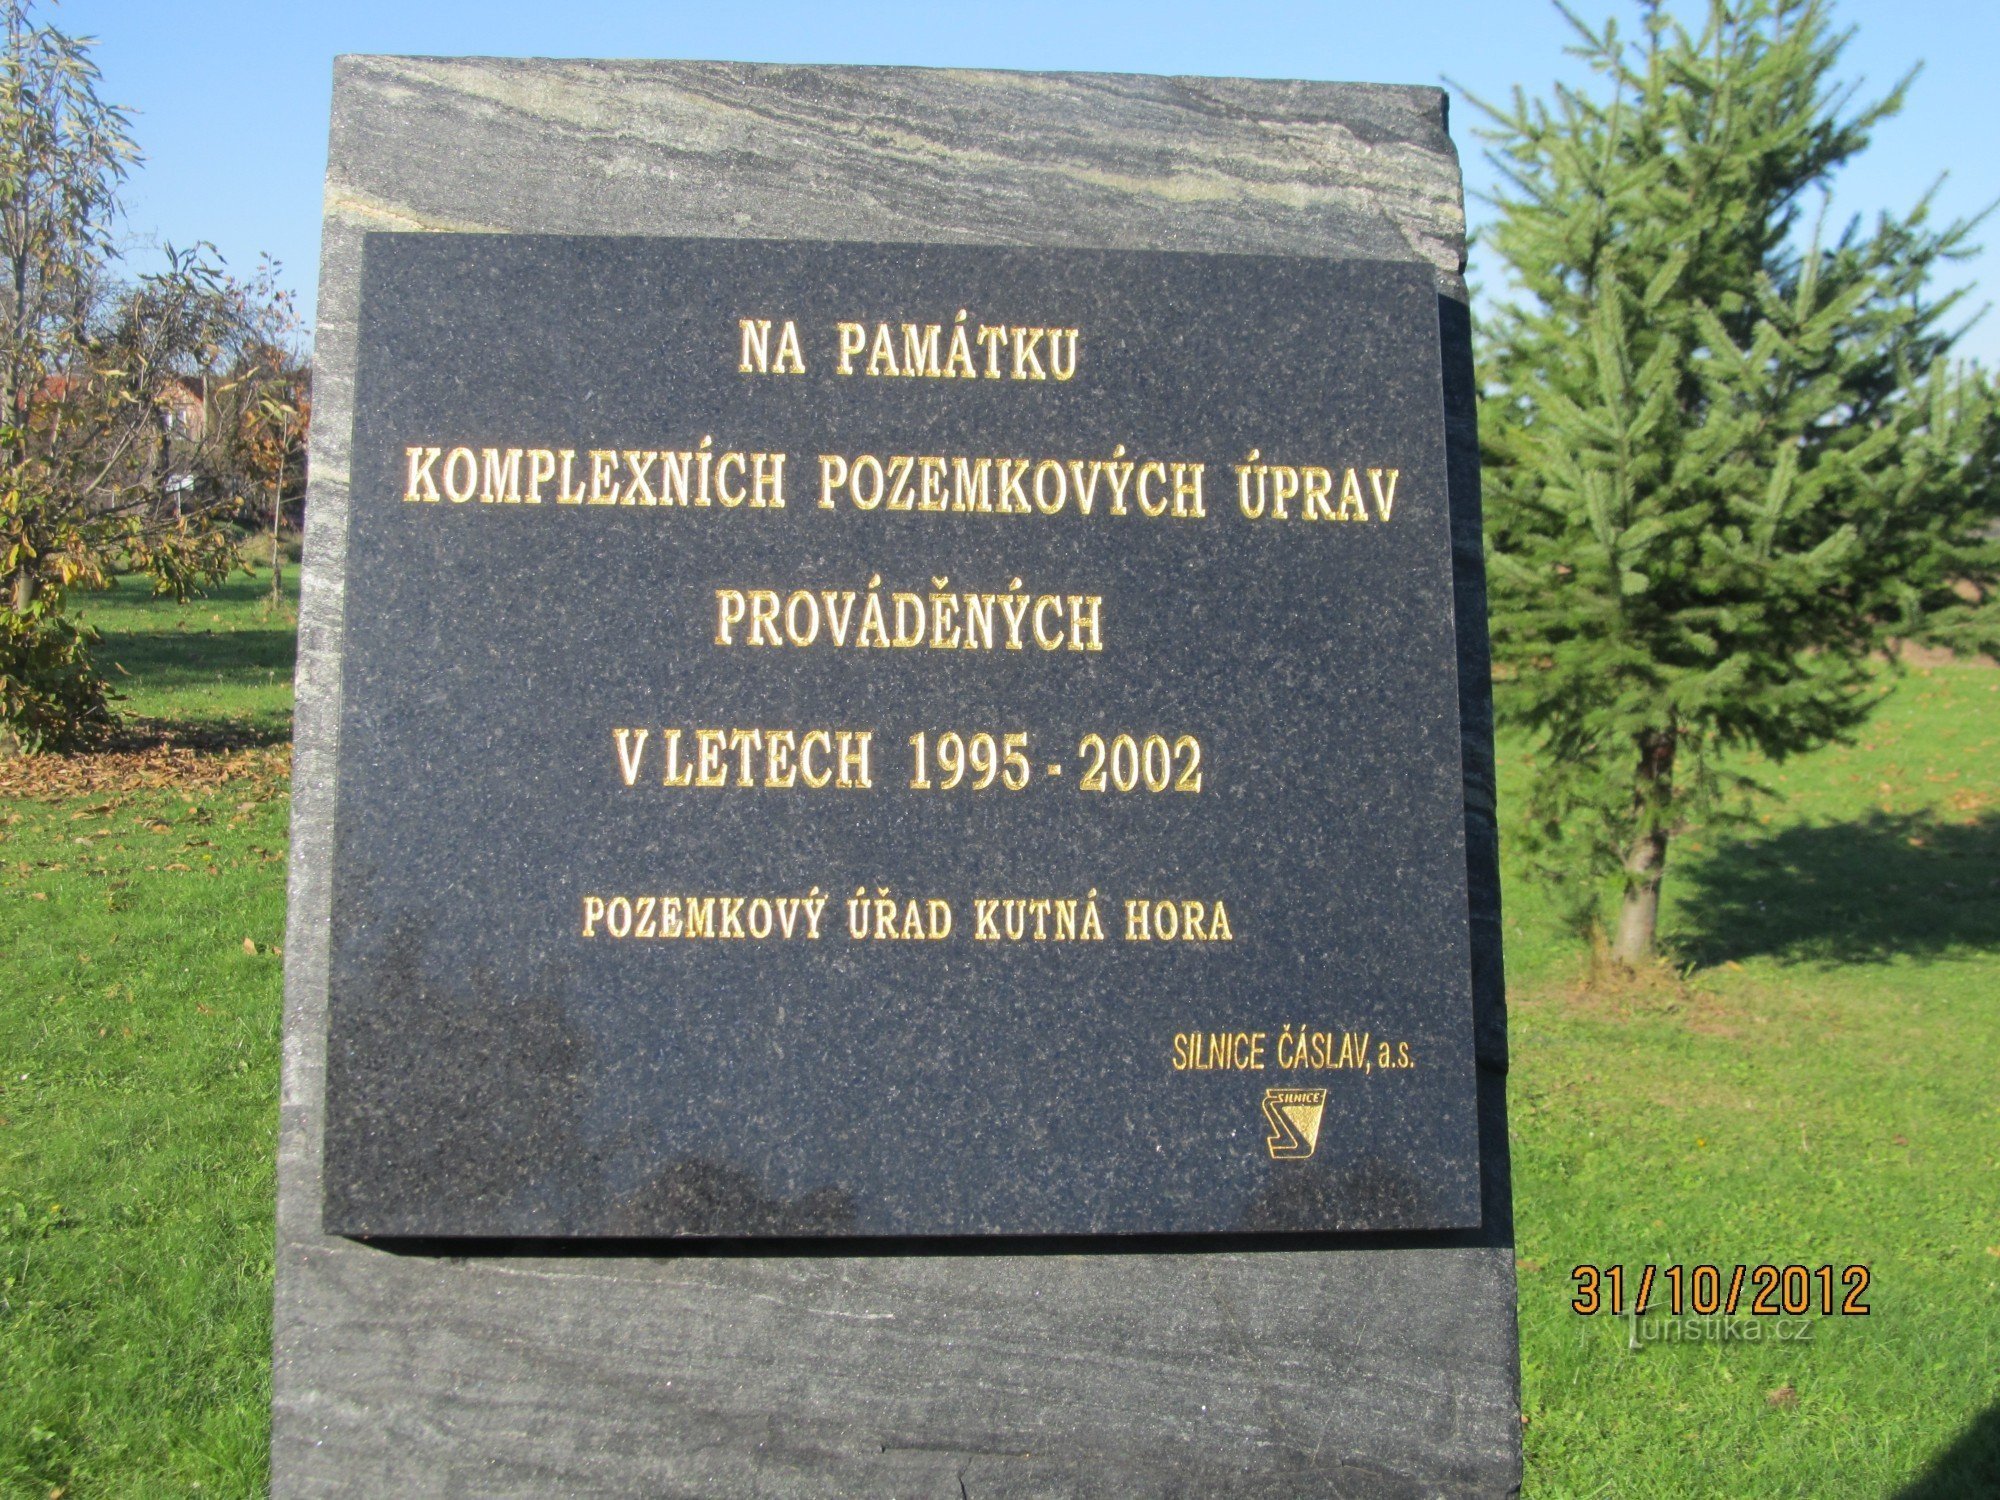 Spomenik u Hlízovu ispred groblja - natpis na spomeniku